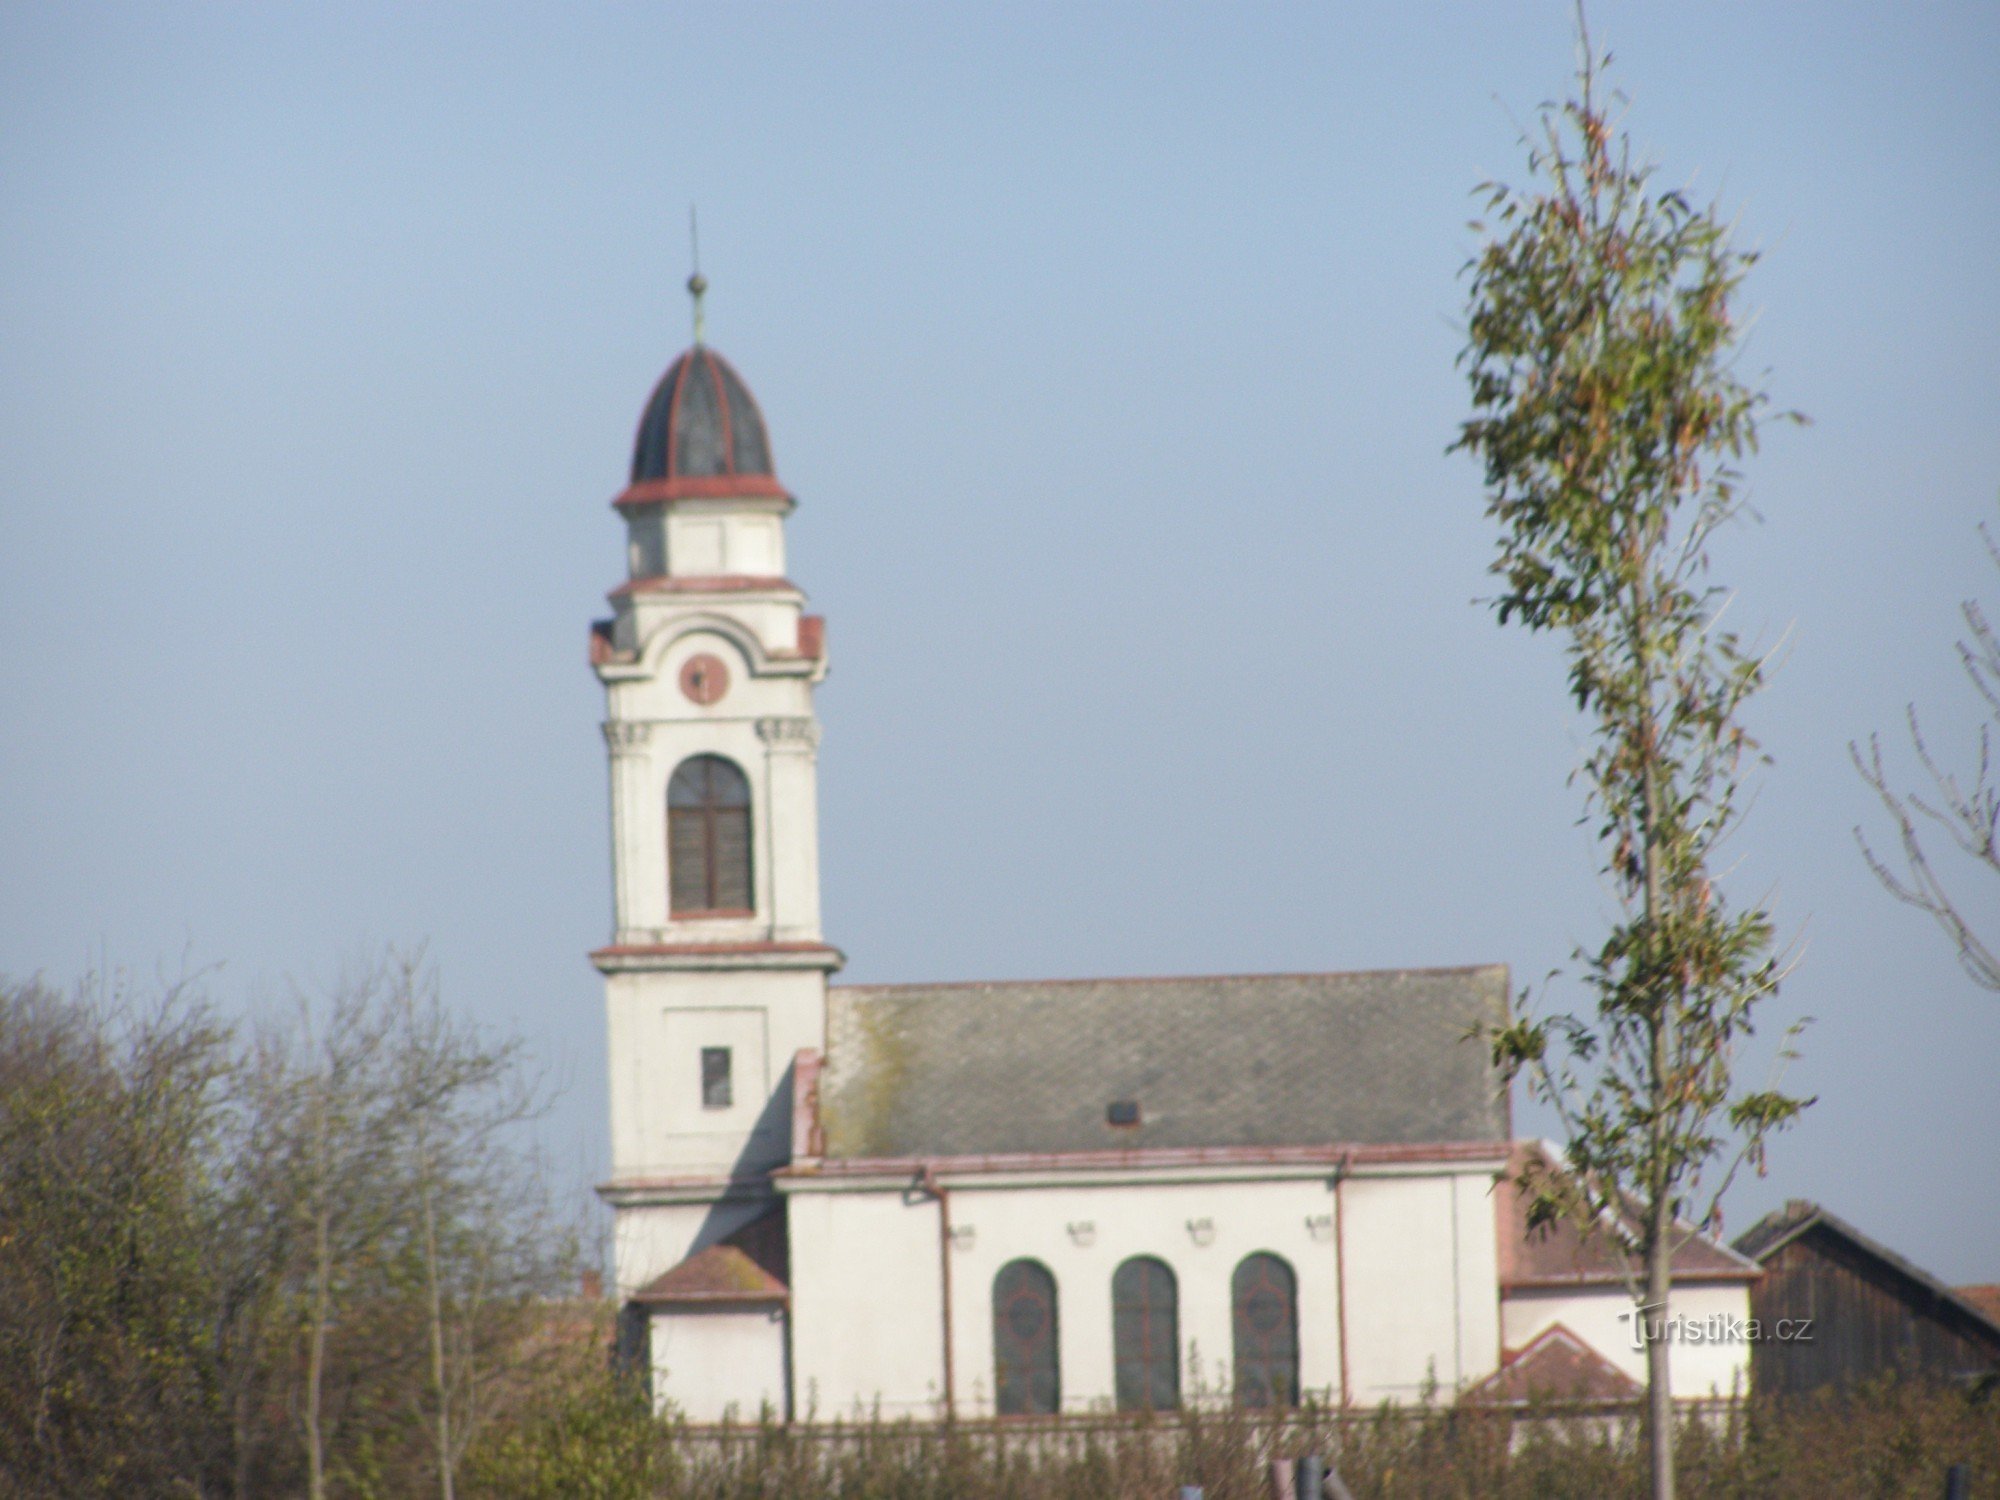 Podulšany - kerk van St. Nicolaas